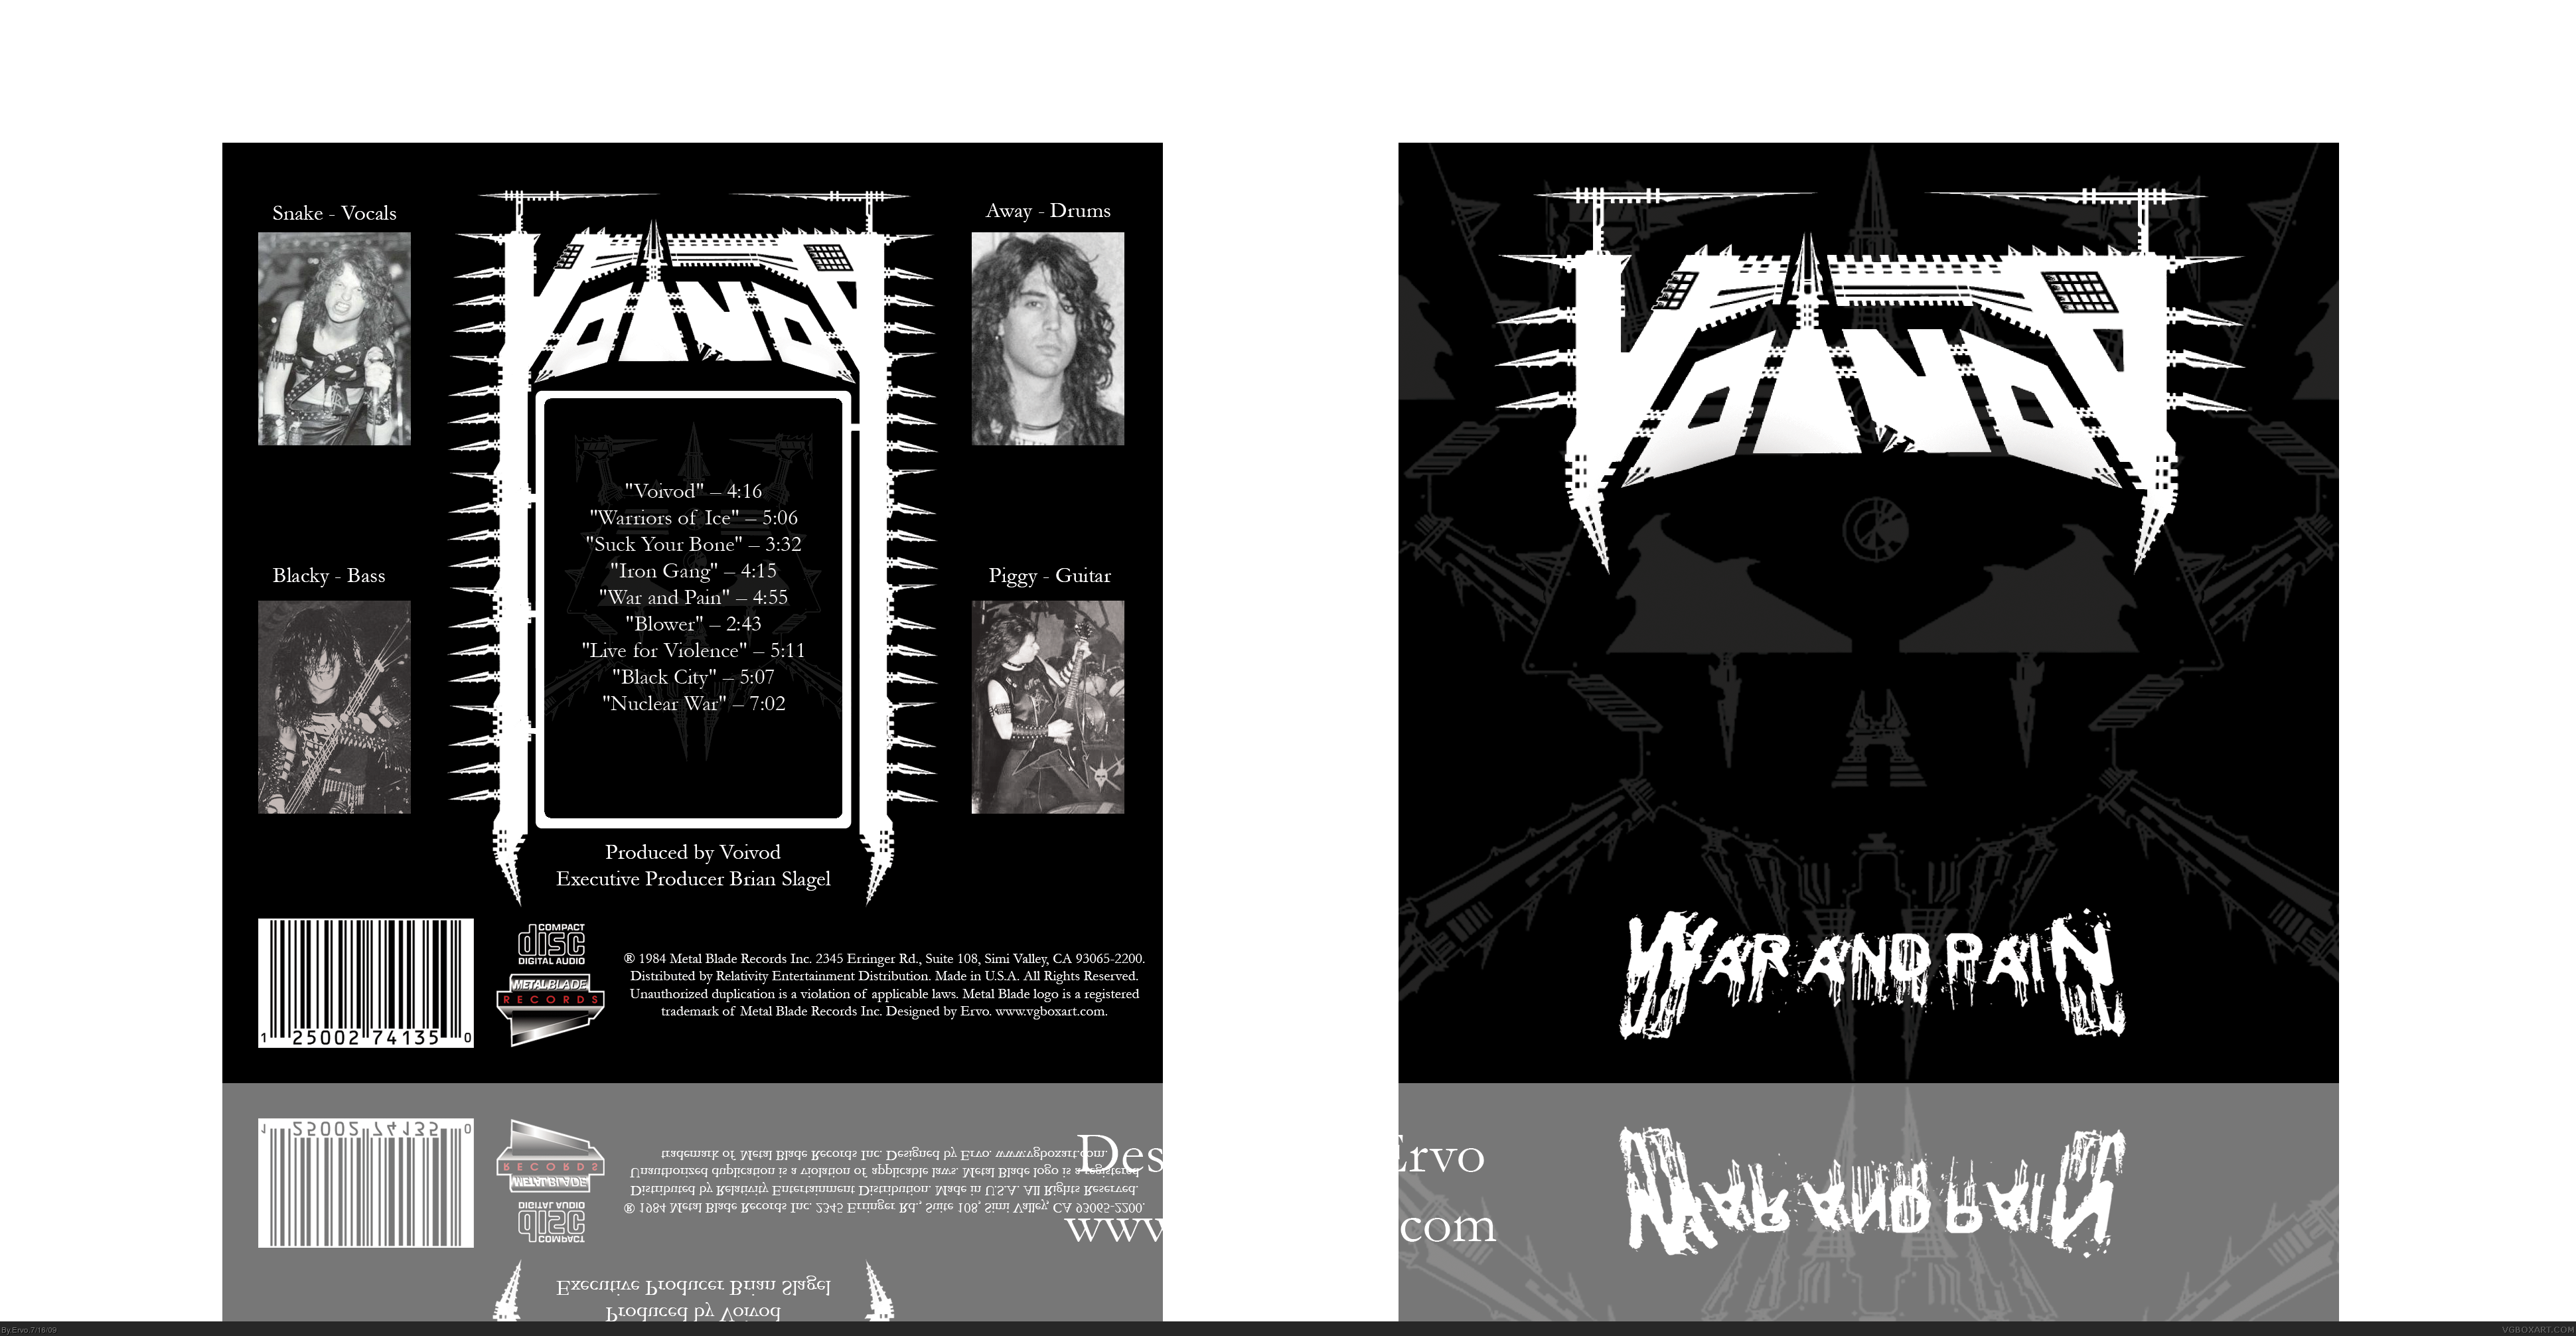 Voivod - War & Pain box cover